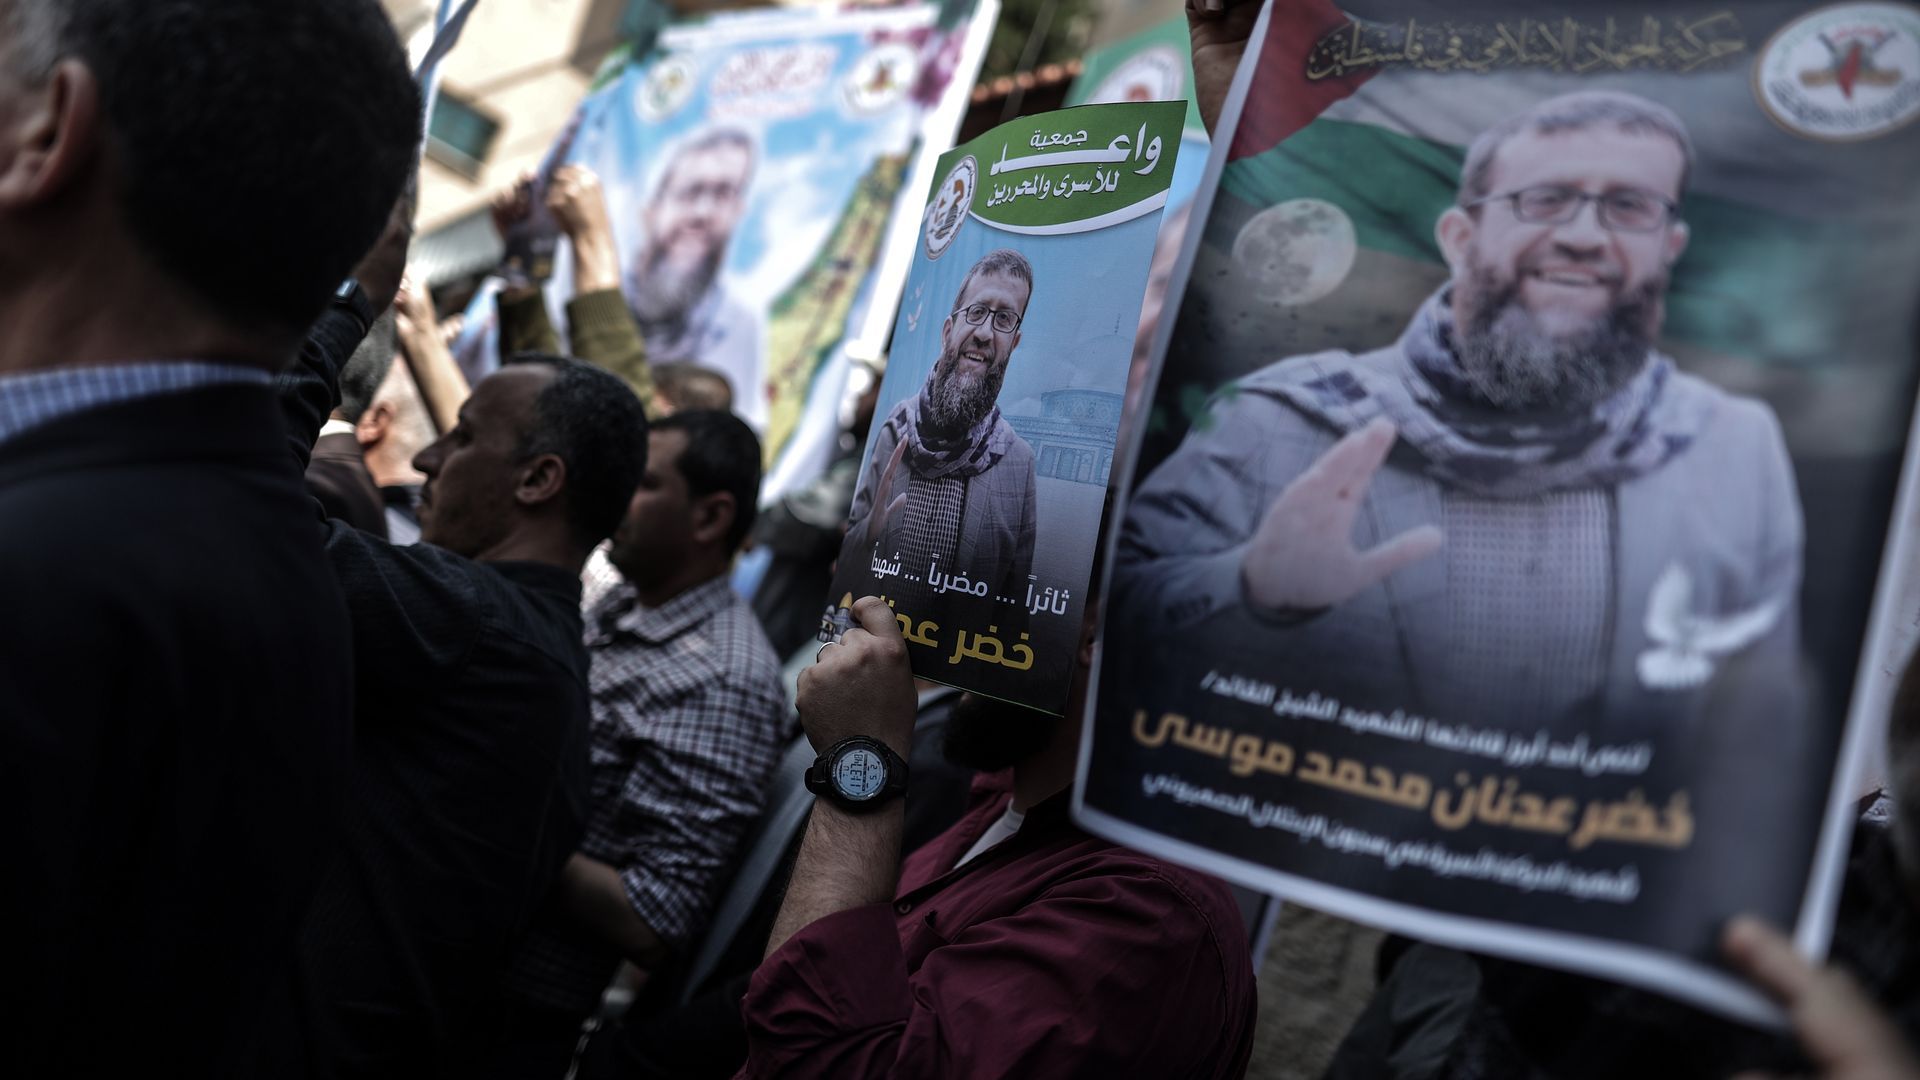 People in Gaza city protest against the death of Khader Adnan in Israeli custody on May 2. Photo: Ali Jadallah/Anadolu Agency via Getty Images